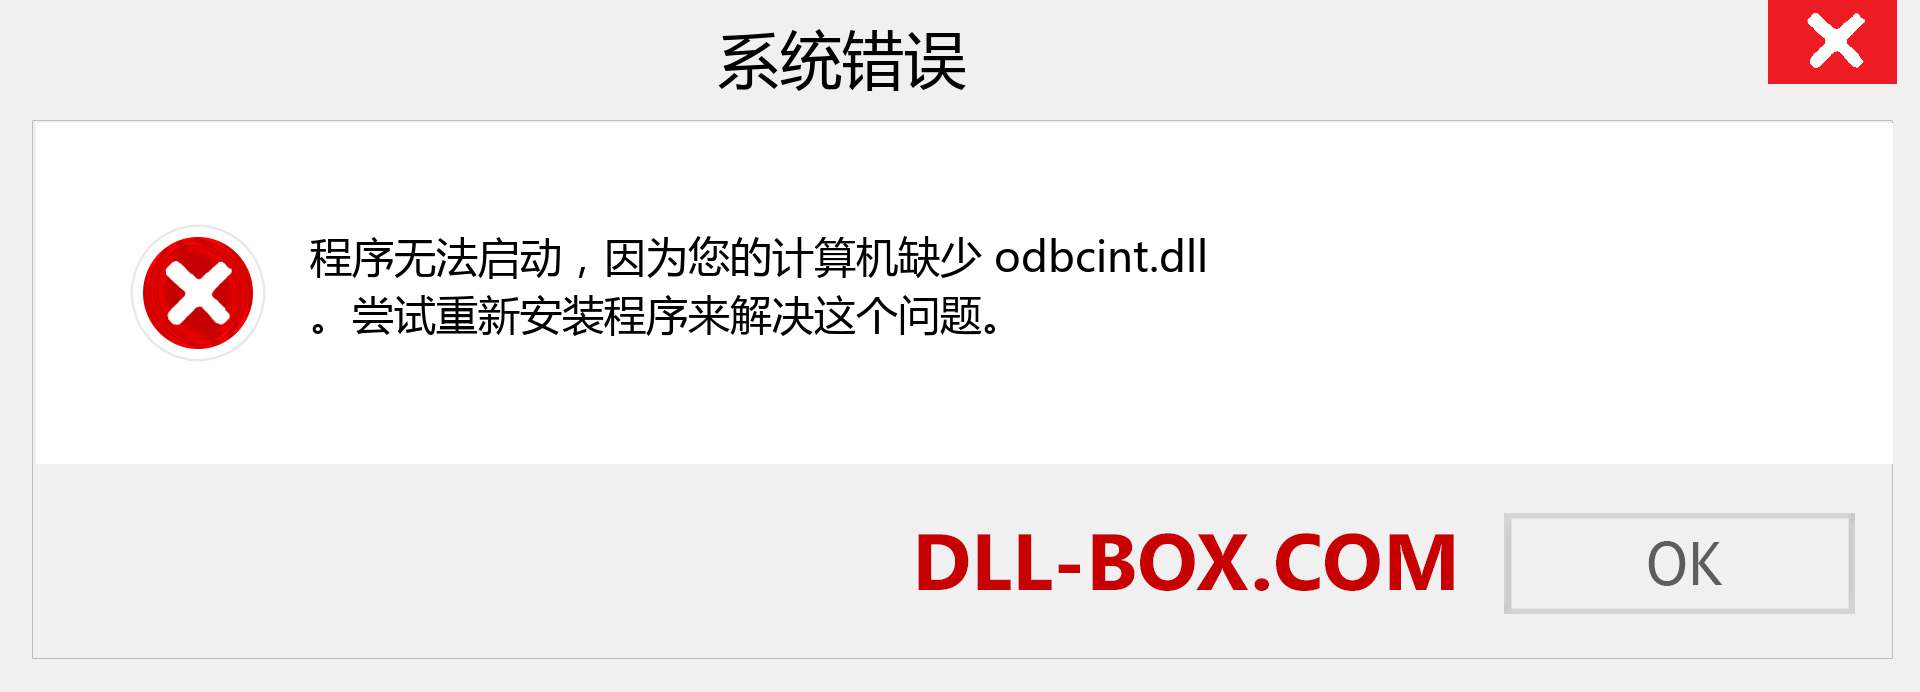 odbcint.dll 文件丢失？。 适用于 Windows 7、8、10 的下载 - 修复 Windows、照片、图像上的 odbcint dll 丢失错误